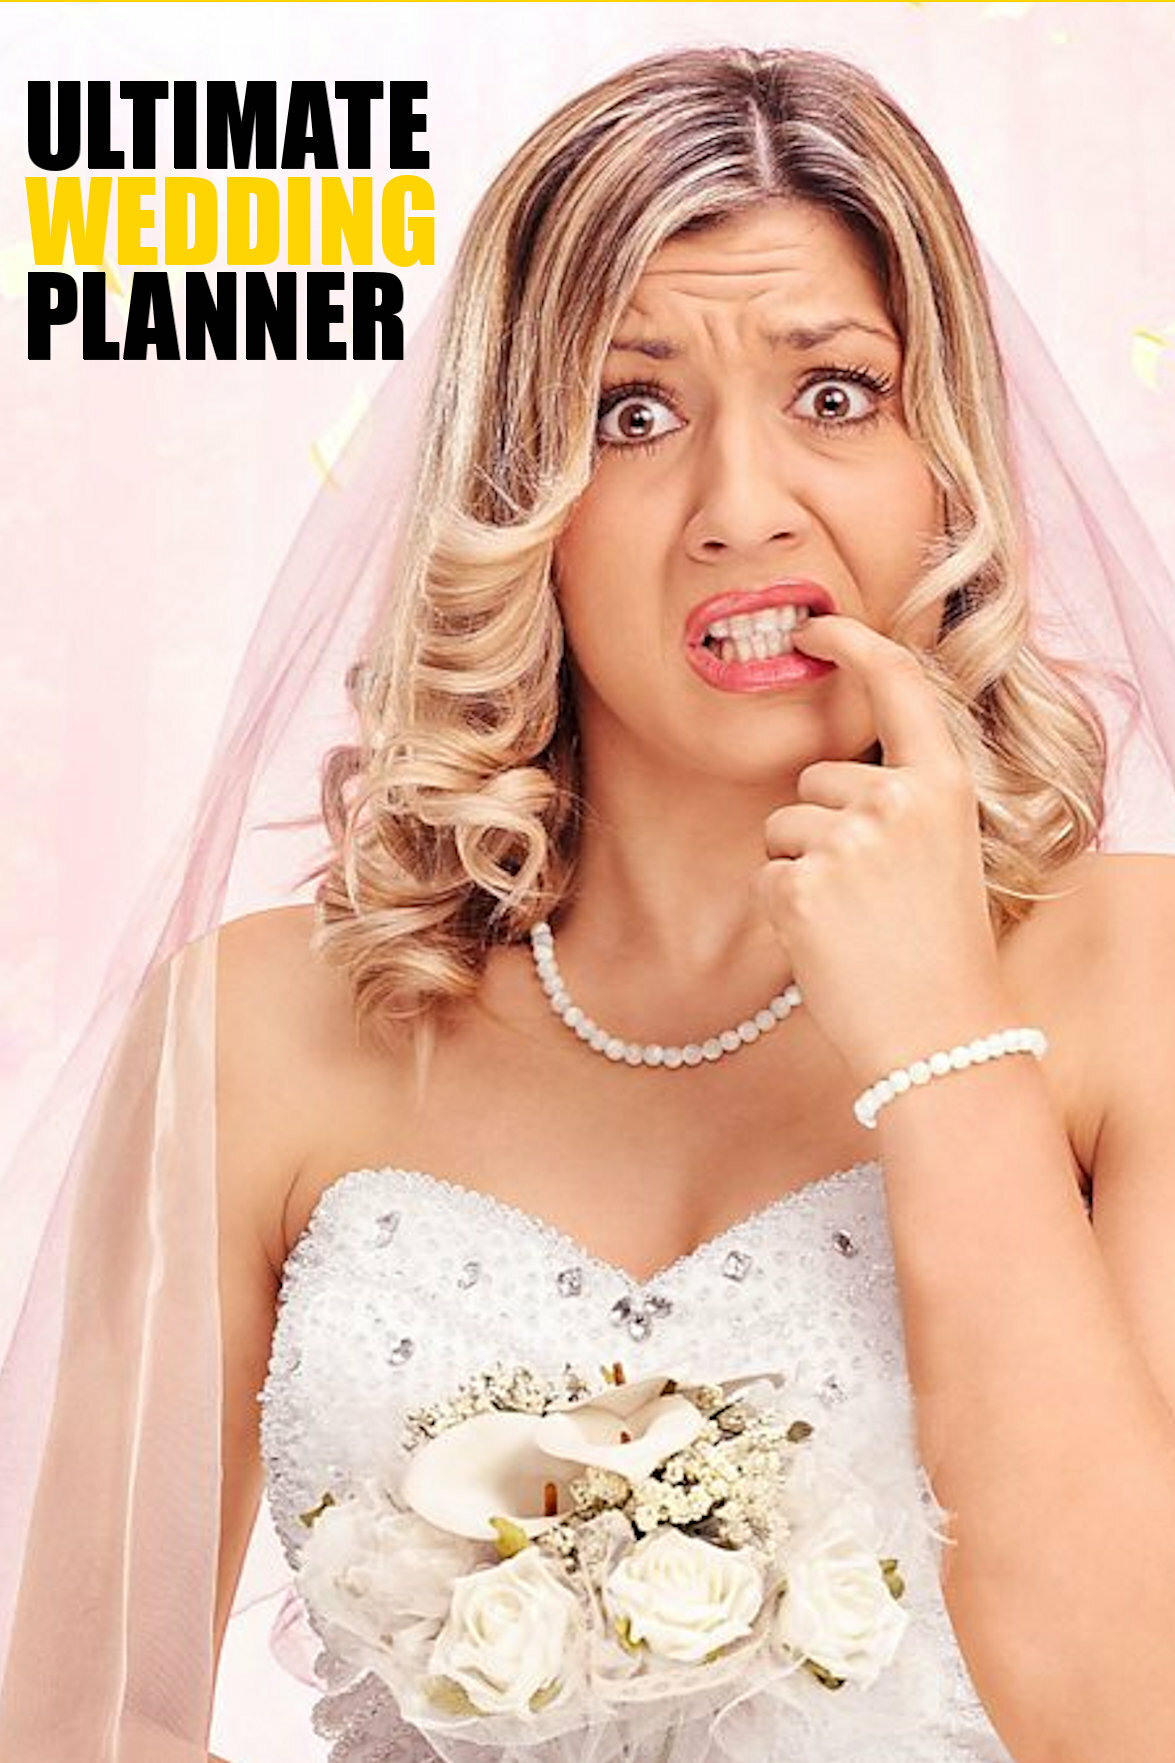 Ultimate Wedding Planner ne zaman